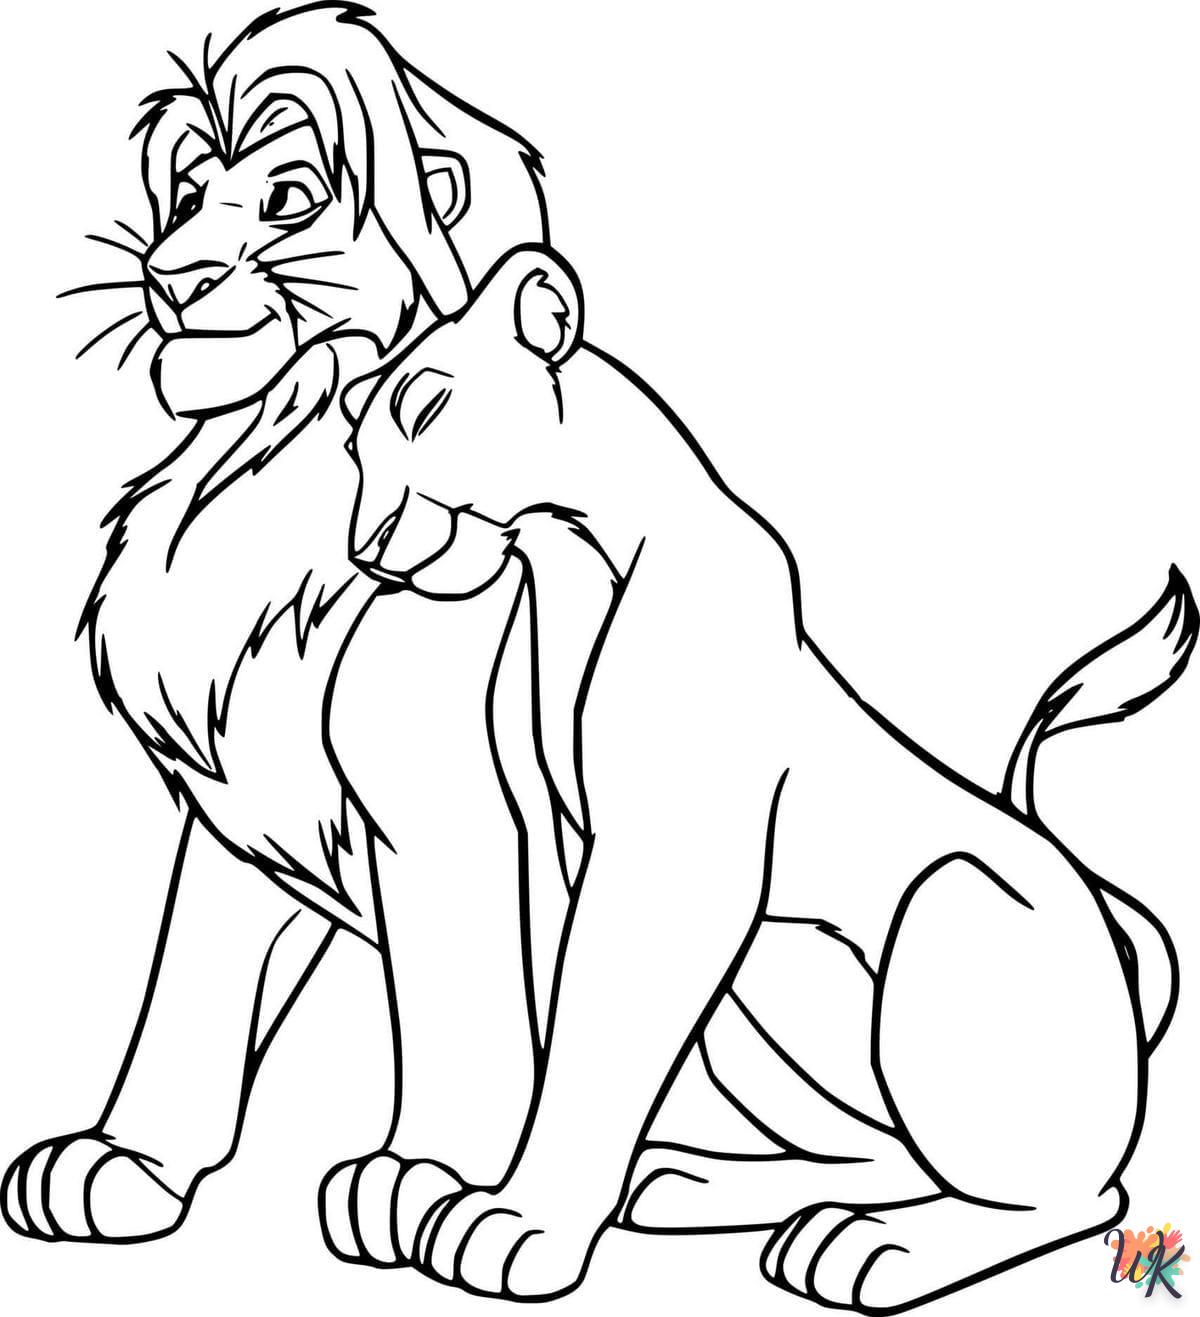 The Lion King kleurplaten19